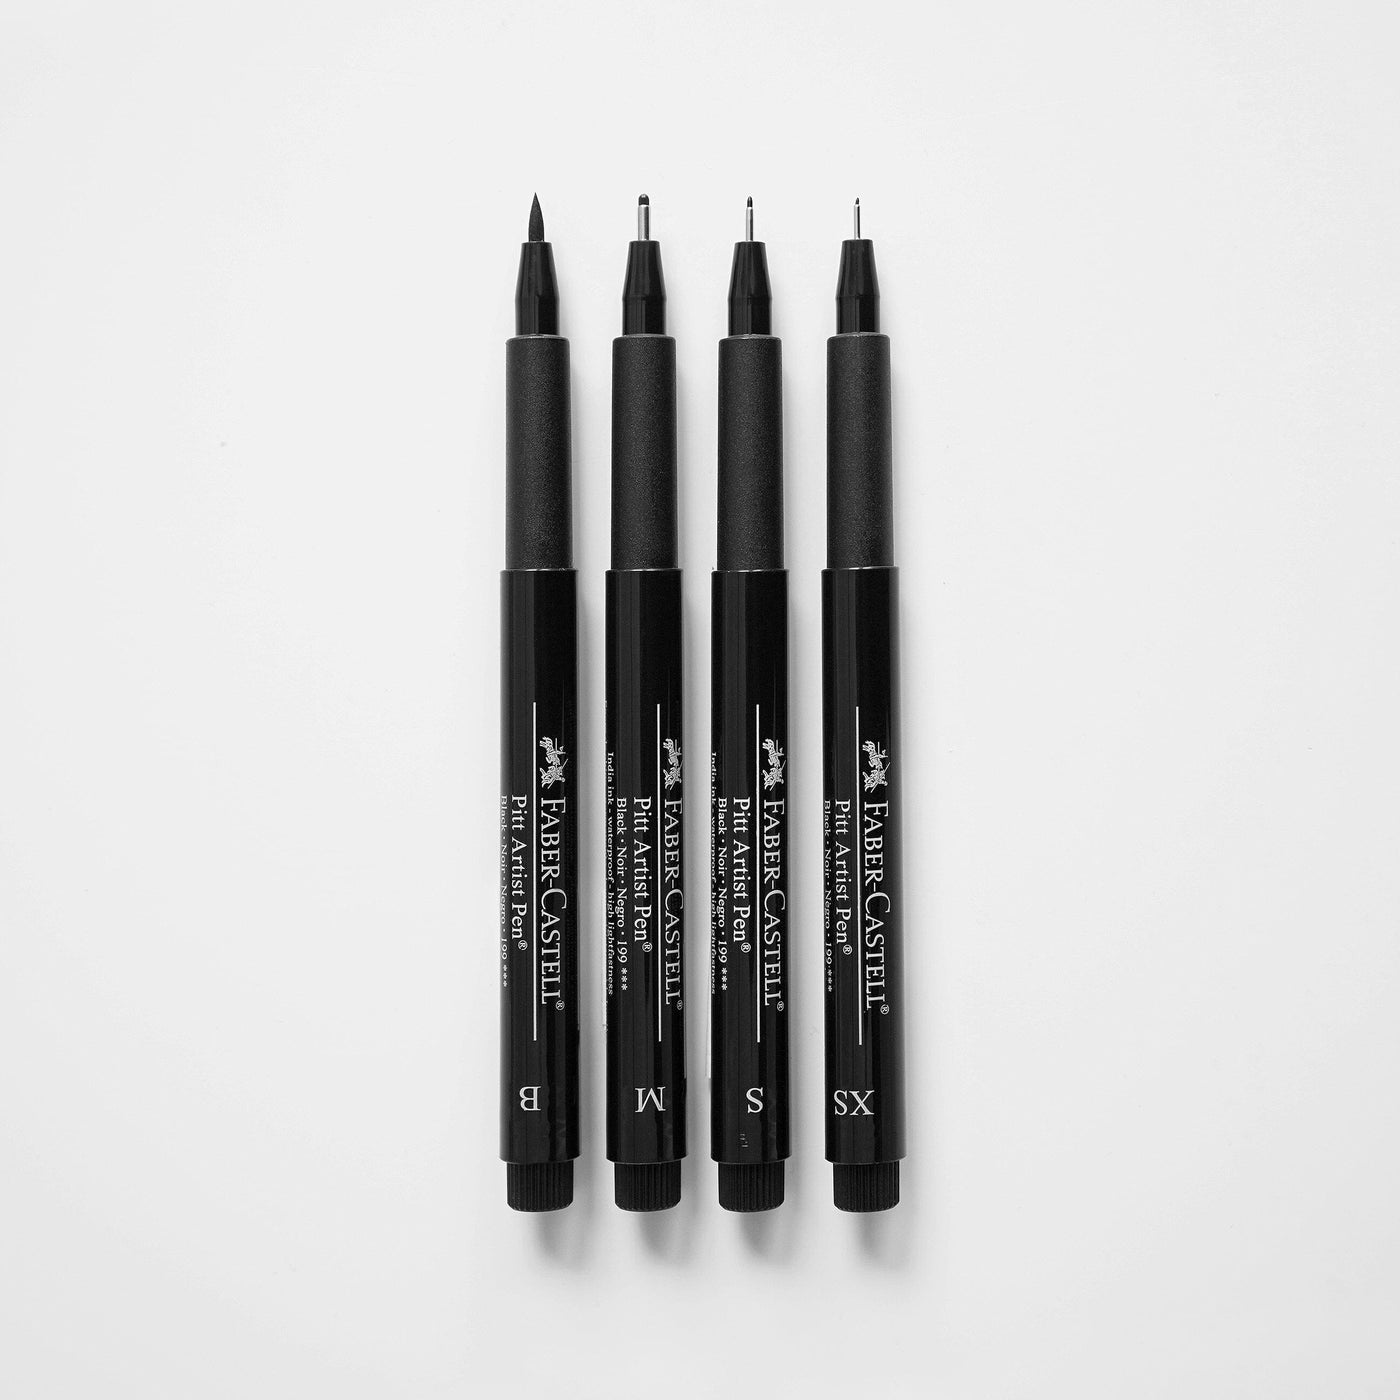 Faber-Castell Pitt Artist Pens - 8 Black India Ink, Assorted Nibs